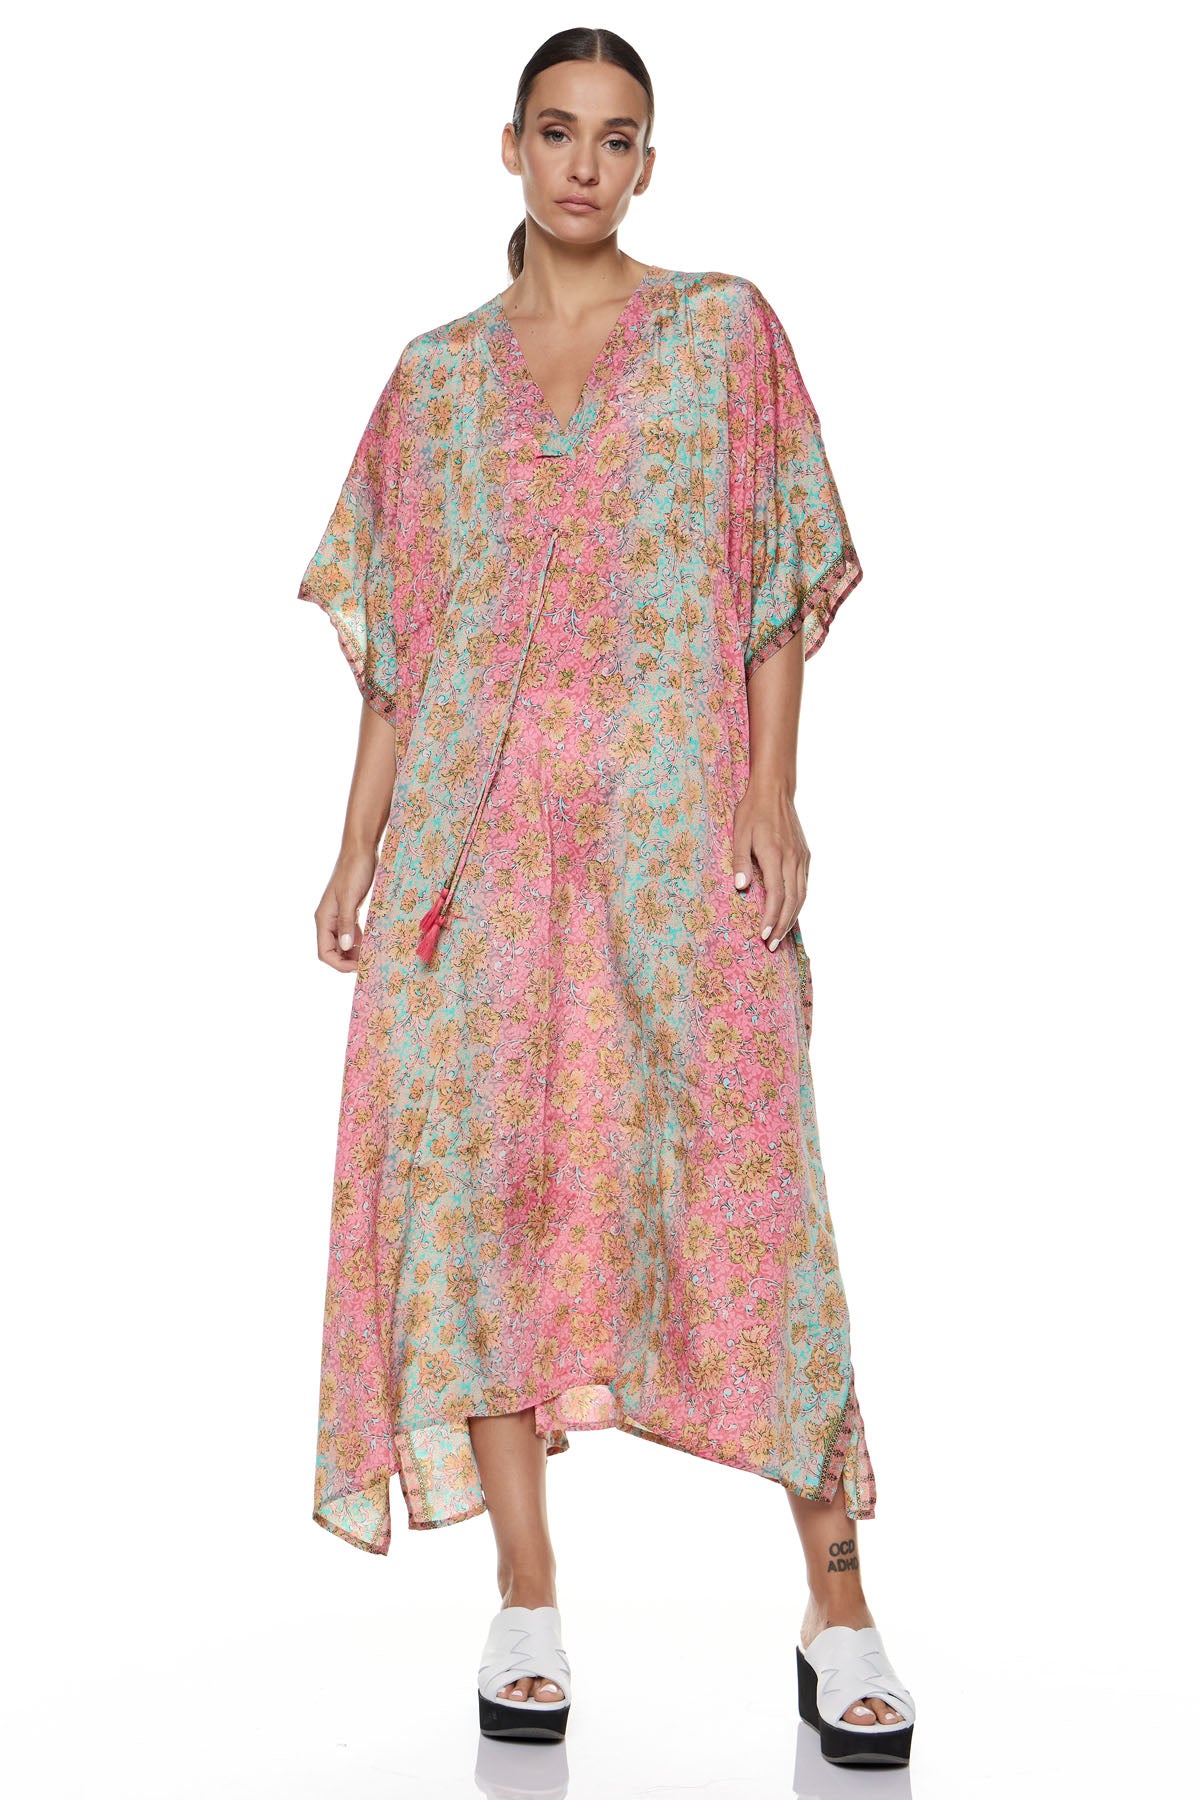 Chic & Simple Lalela Kaftan Dress - Pink/Mint/Beige Floral Knowmad